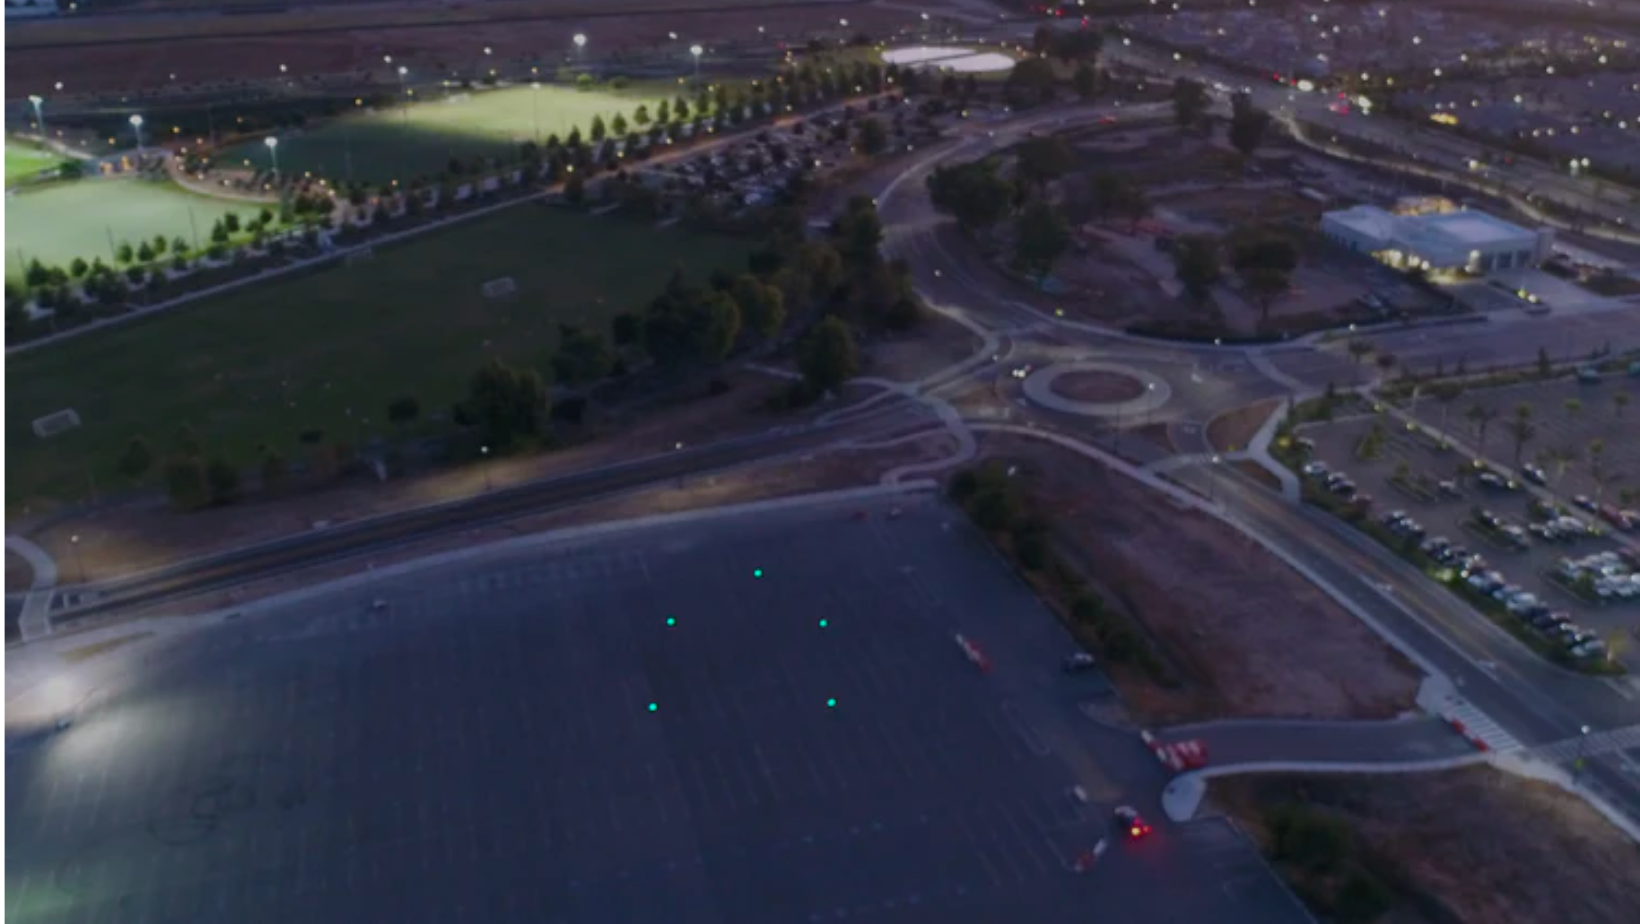 pi-lit® Landing Zone Lights Guide Pilots at Major Festival in 2022